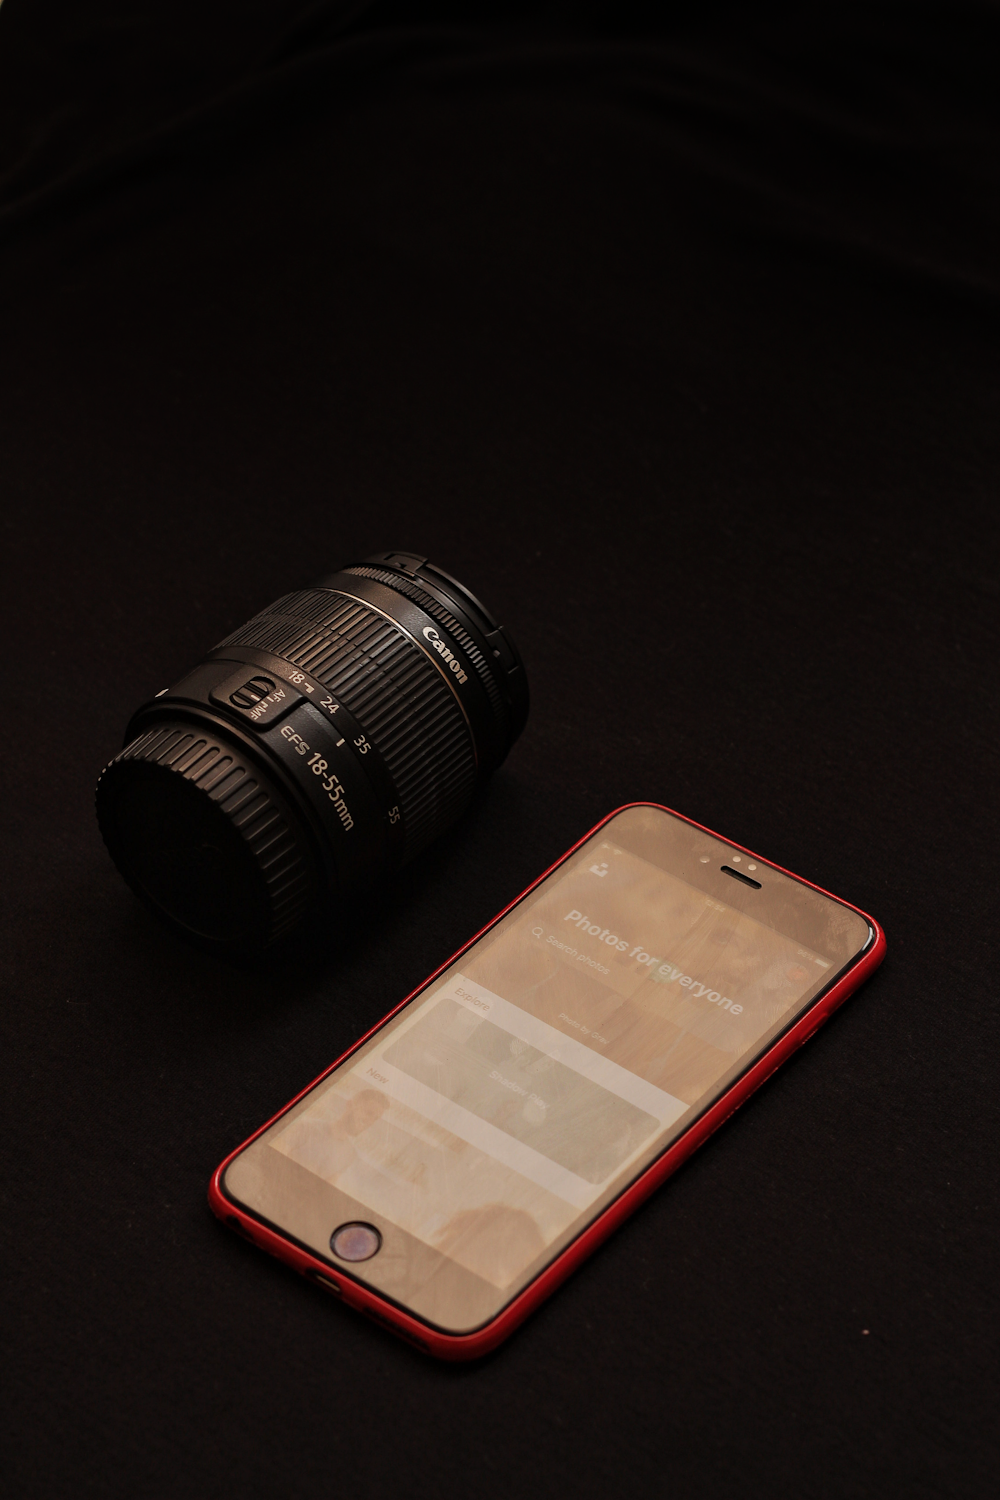 red smartphone beside zoom lens